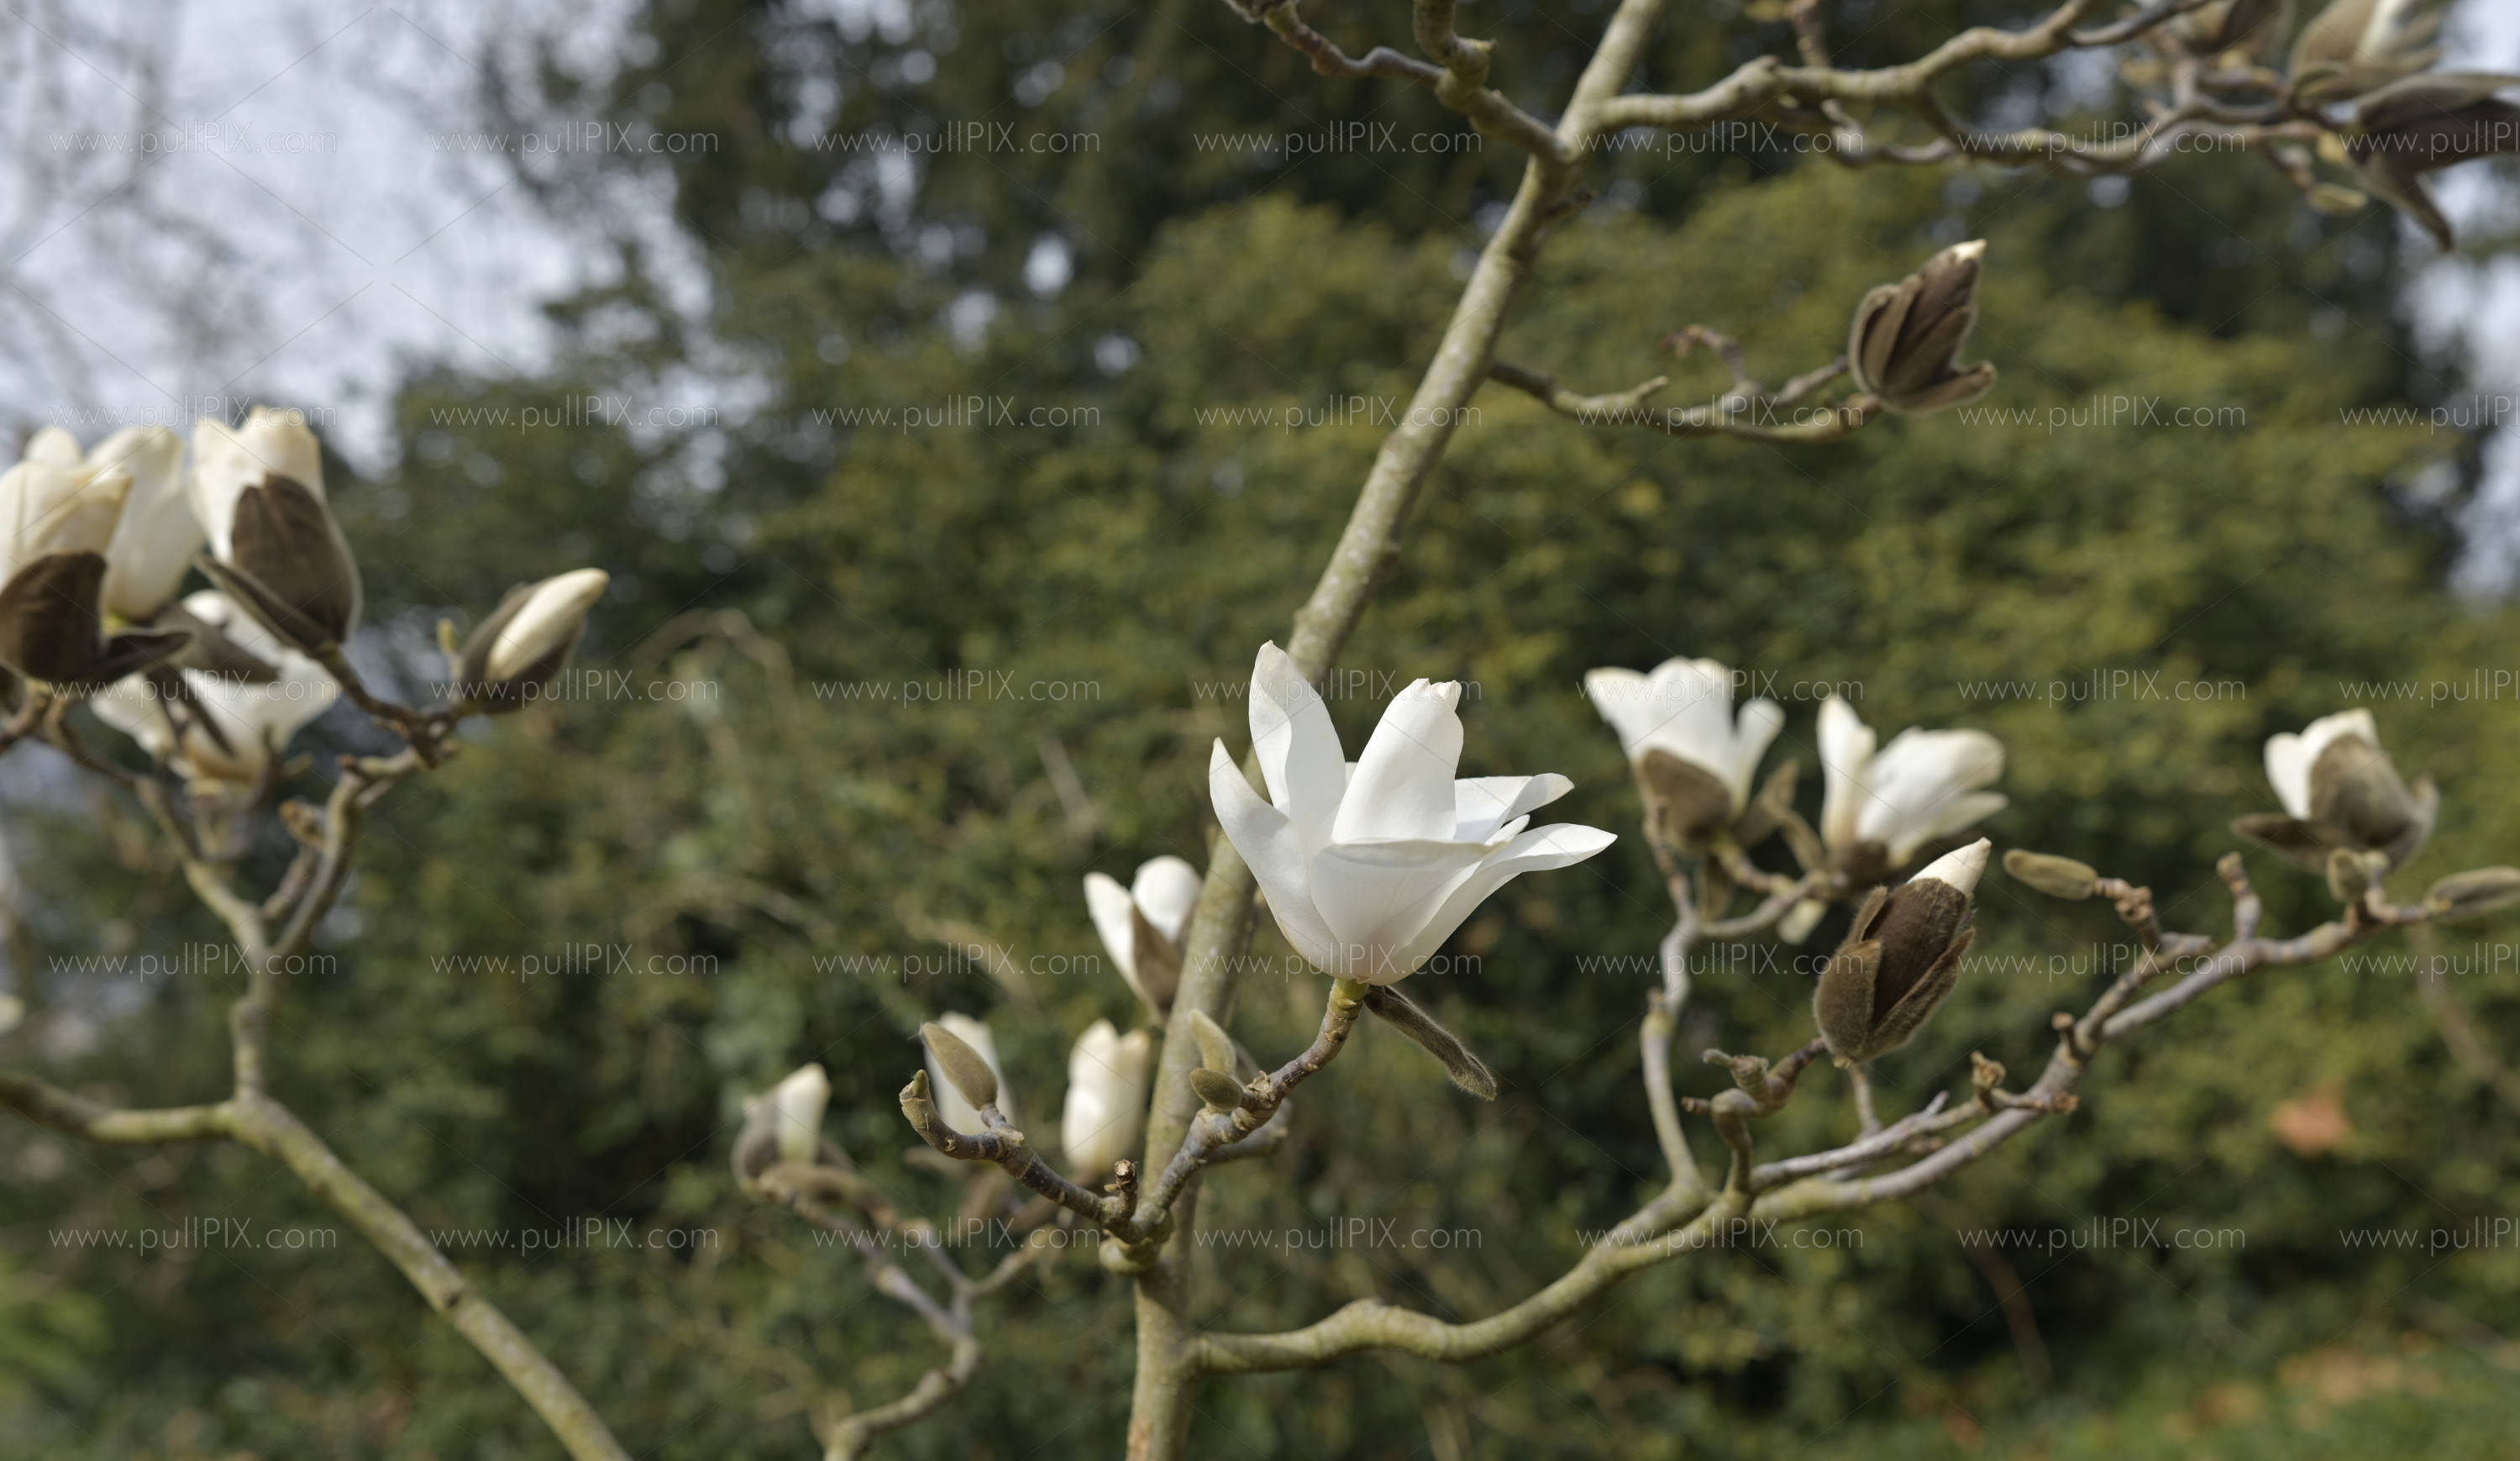 Preview weisse magnolien01.jpg